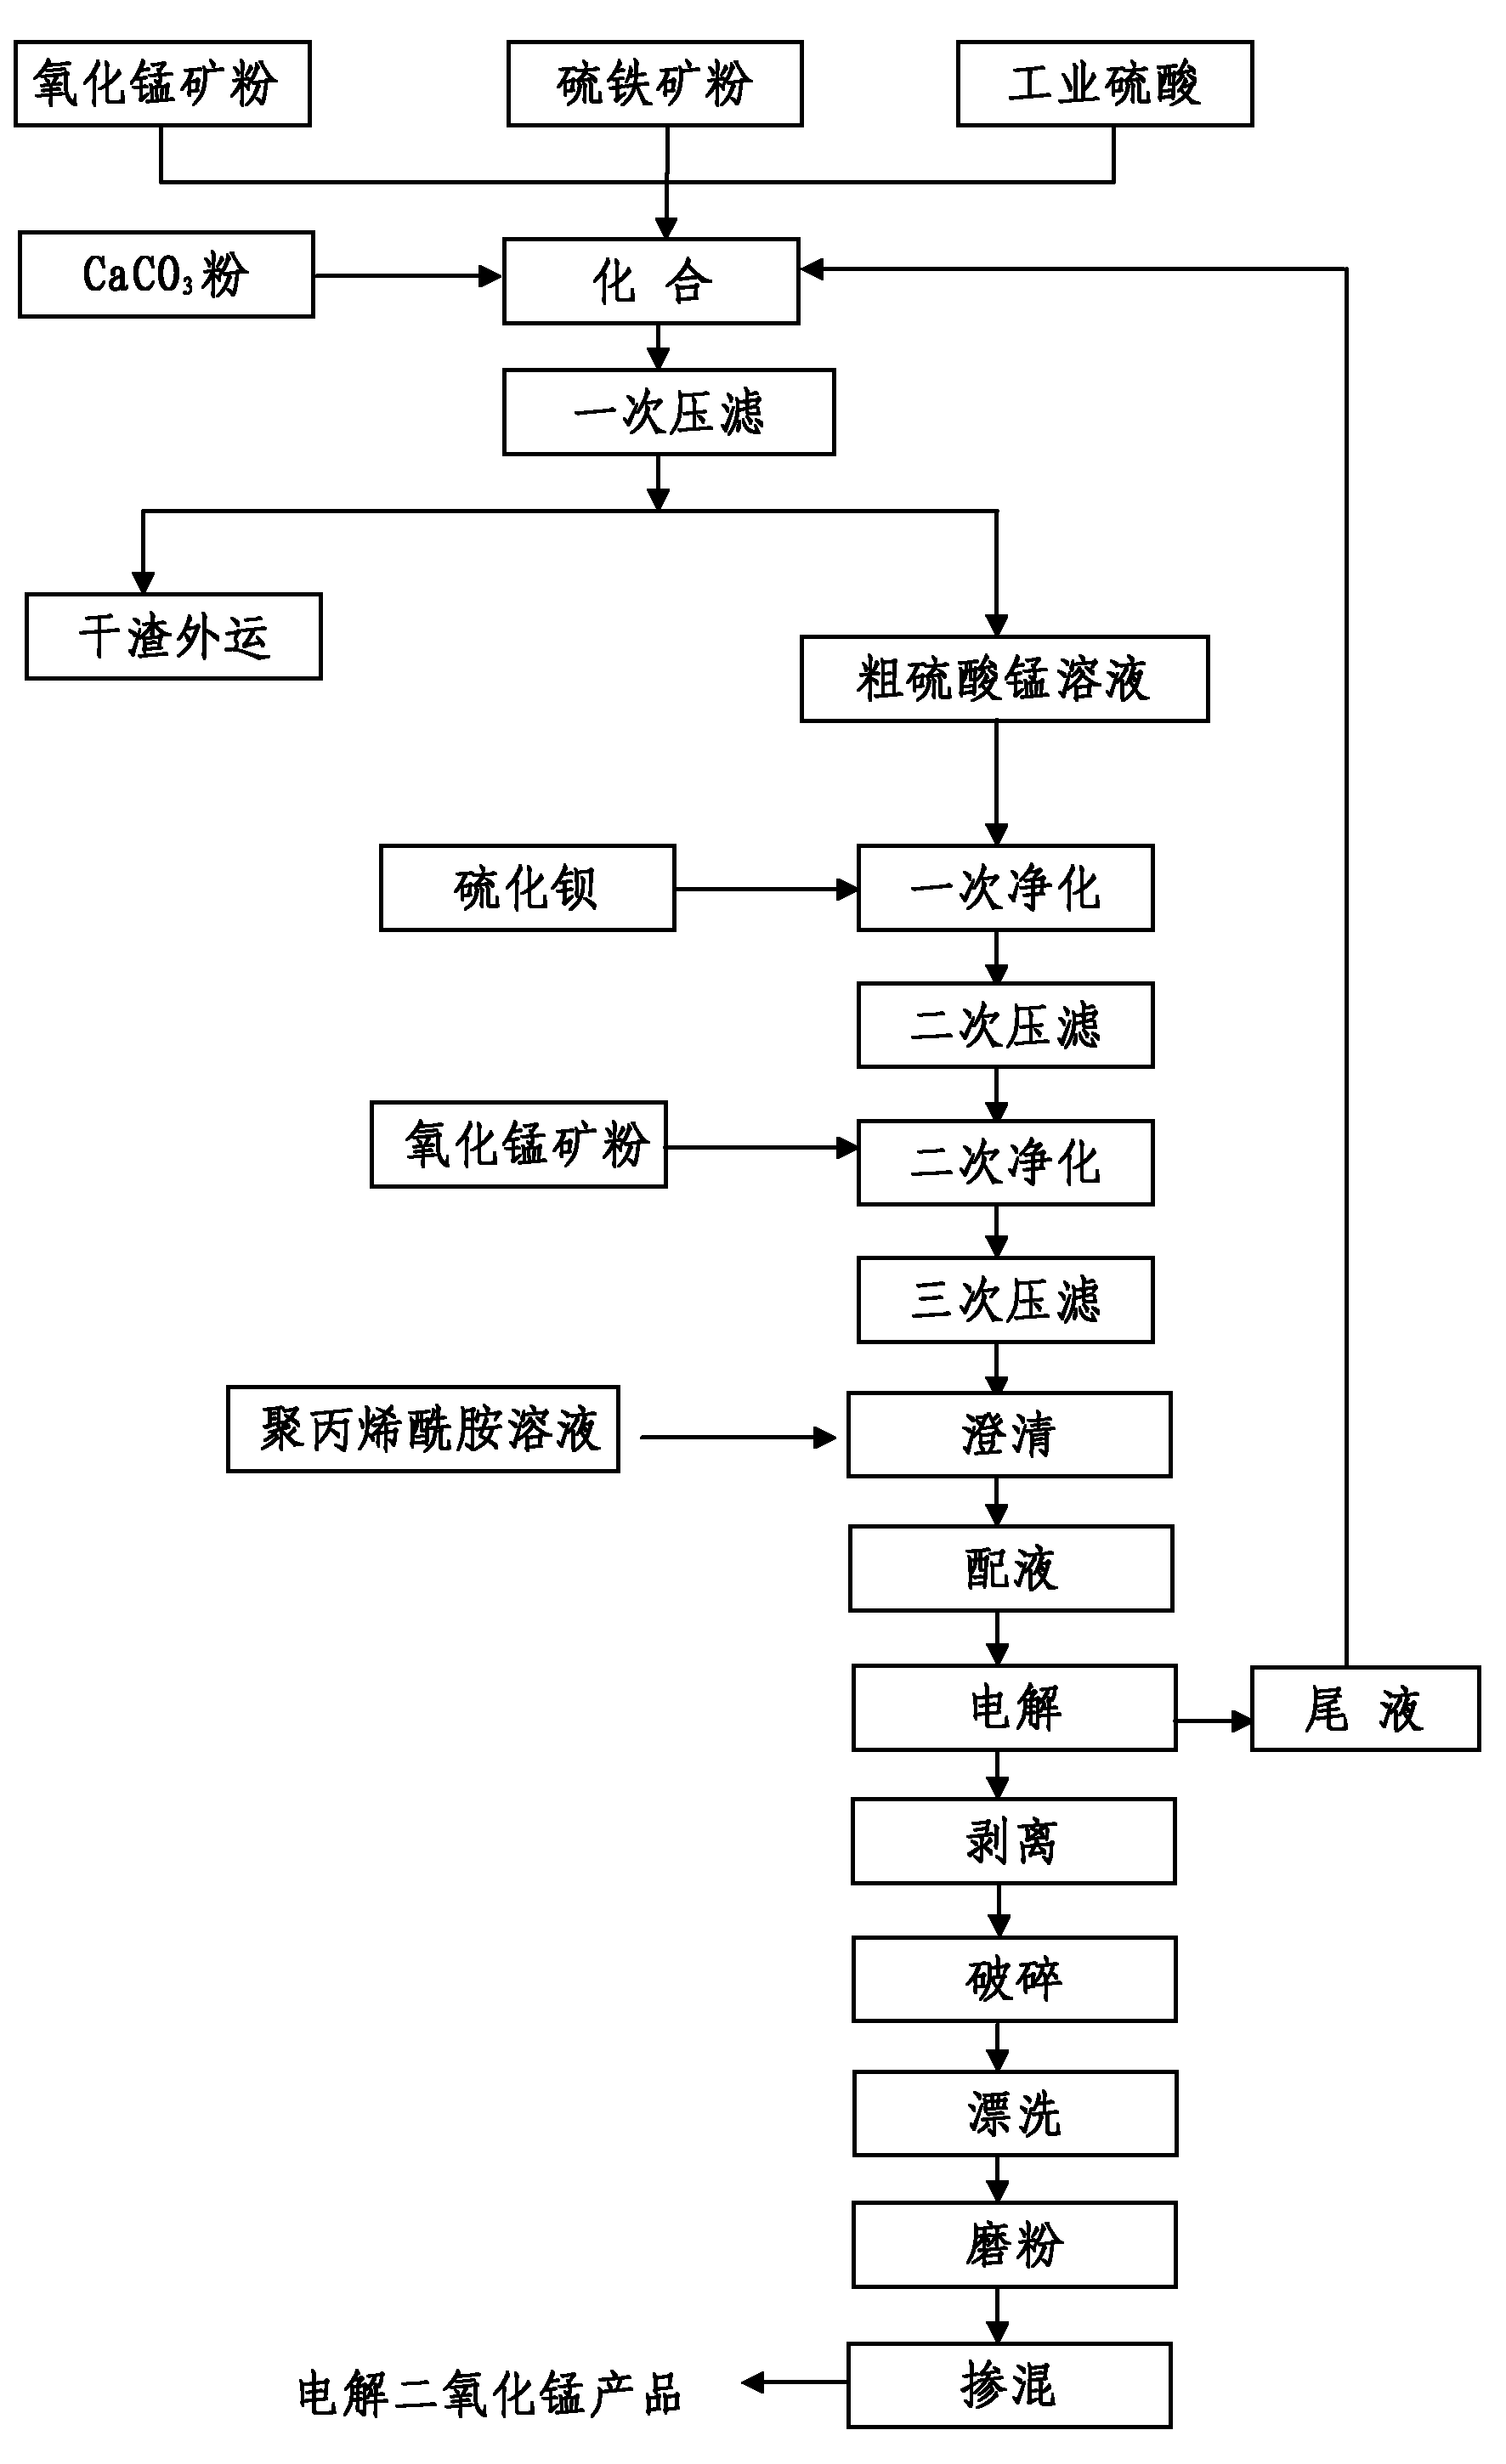 Production method for electrolytic manganese dioxide